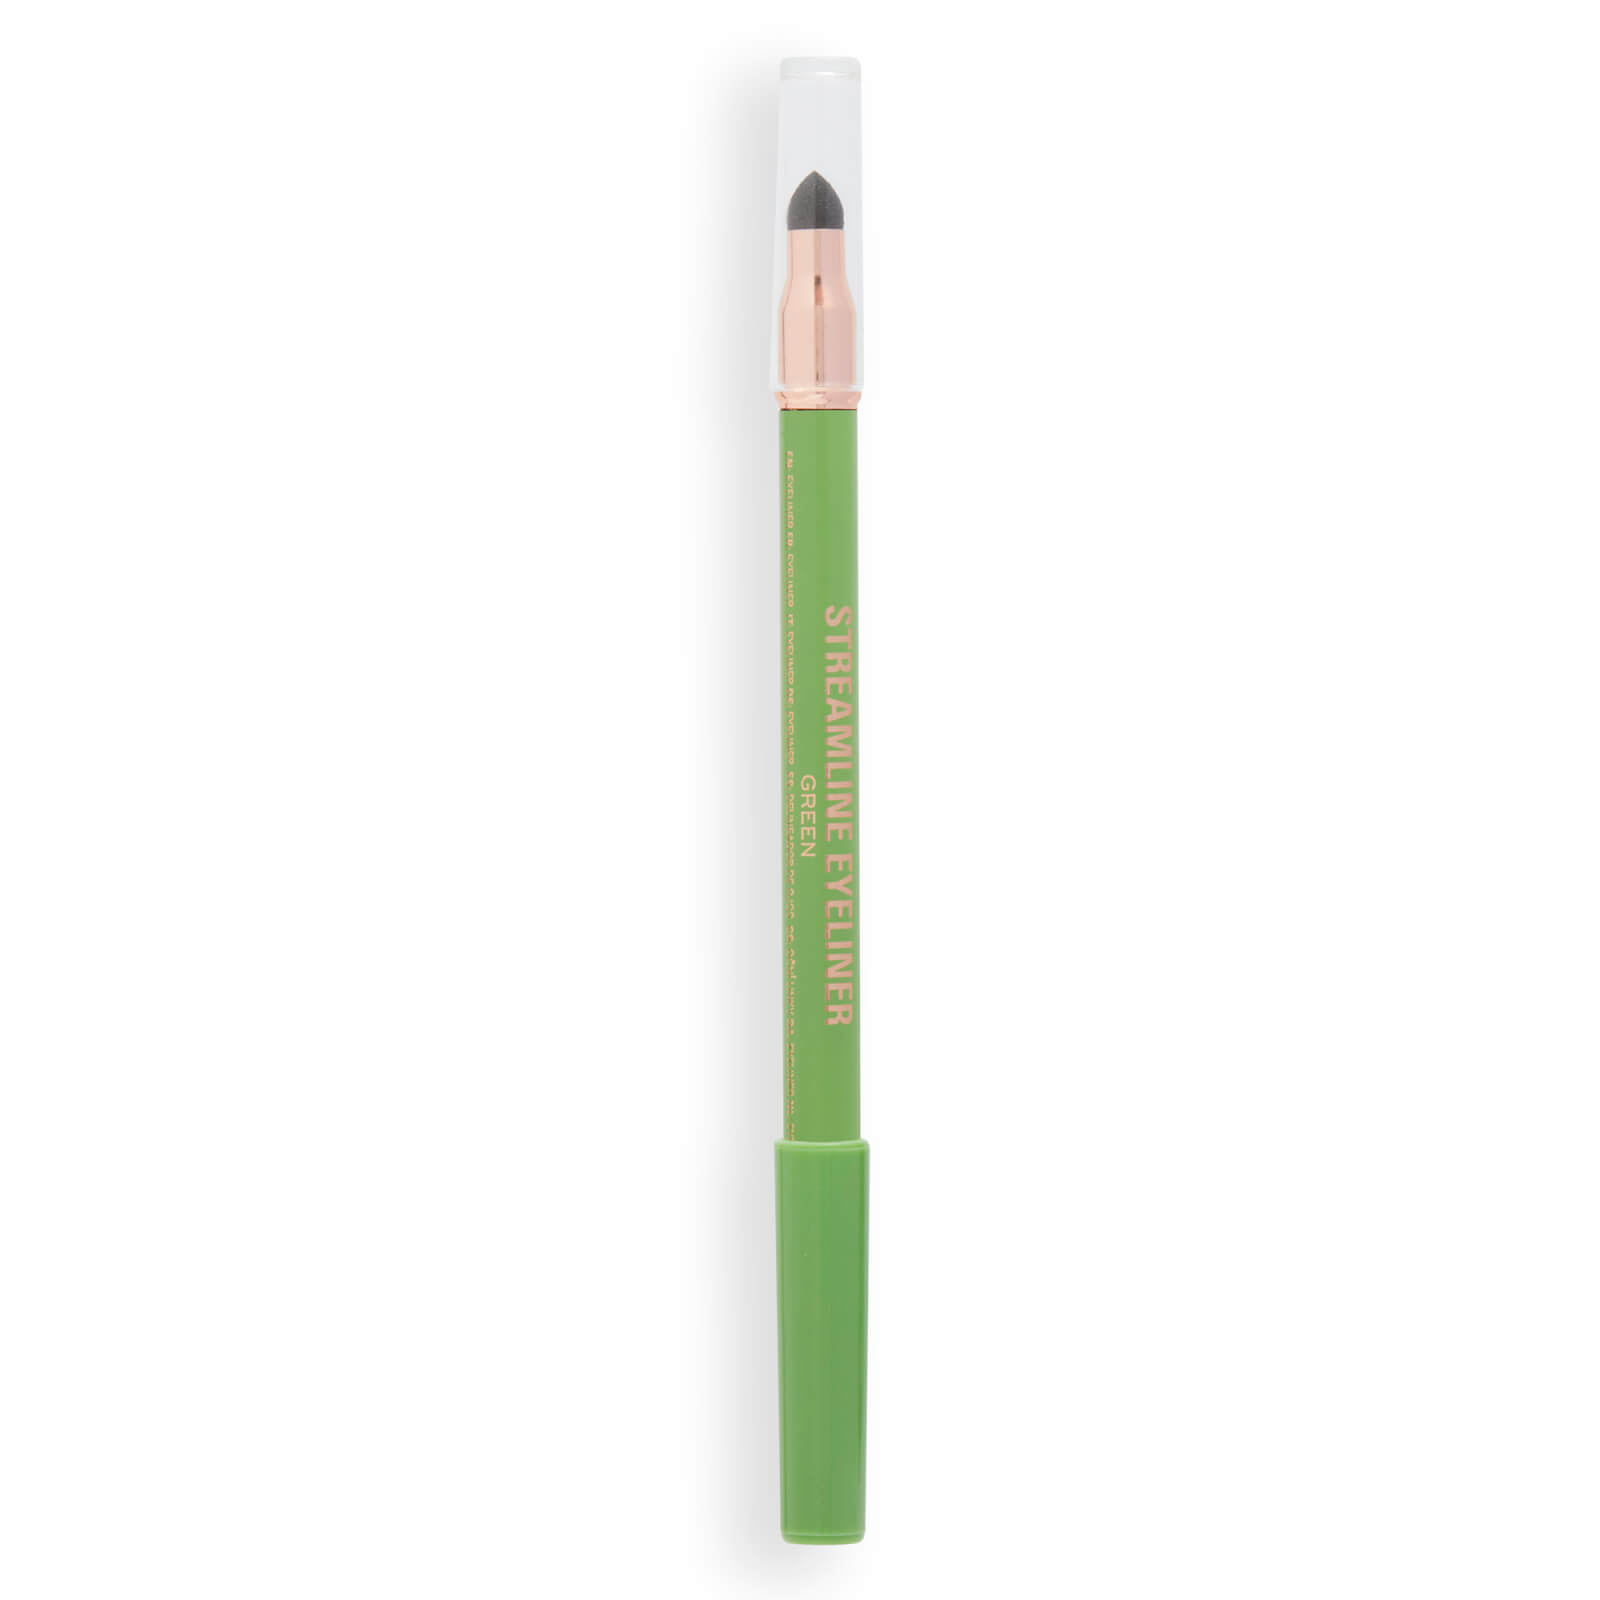 Makeup Revolution Streamline Waterline Eyeliner Pencil (Various Shades) - Green